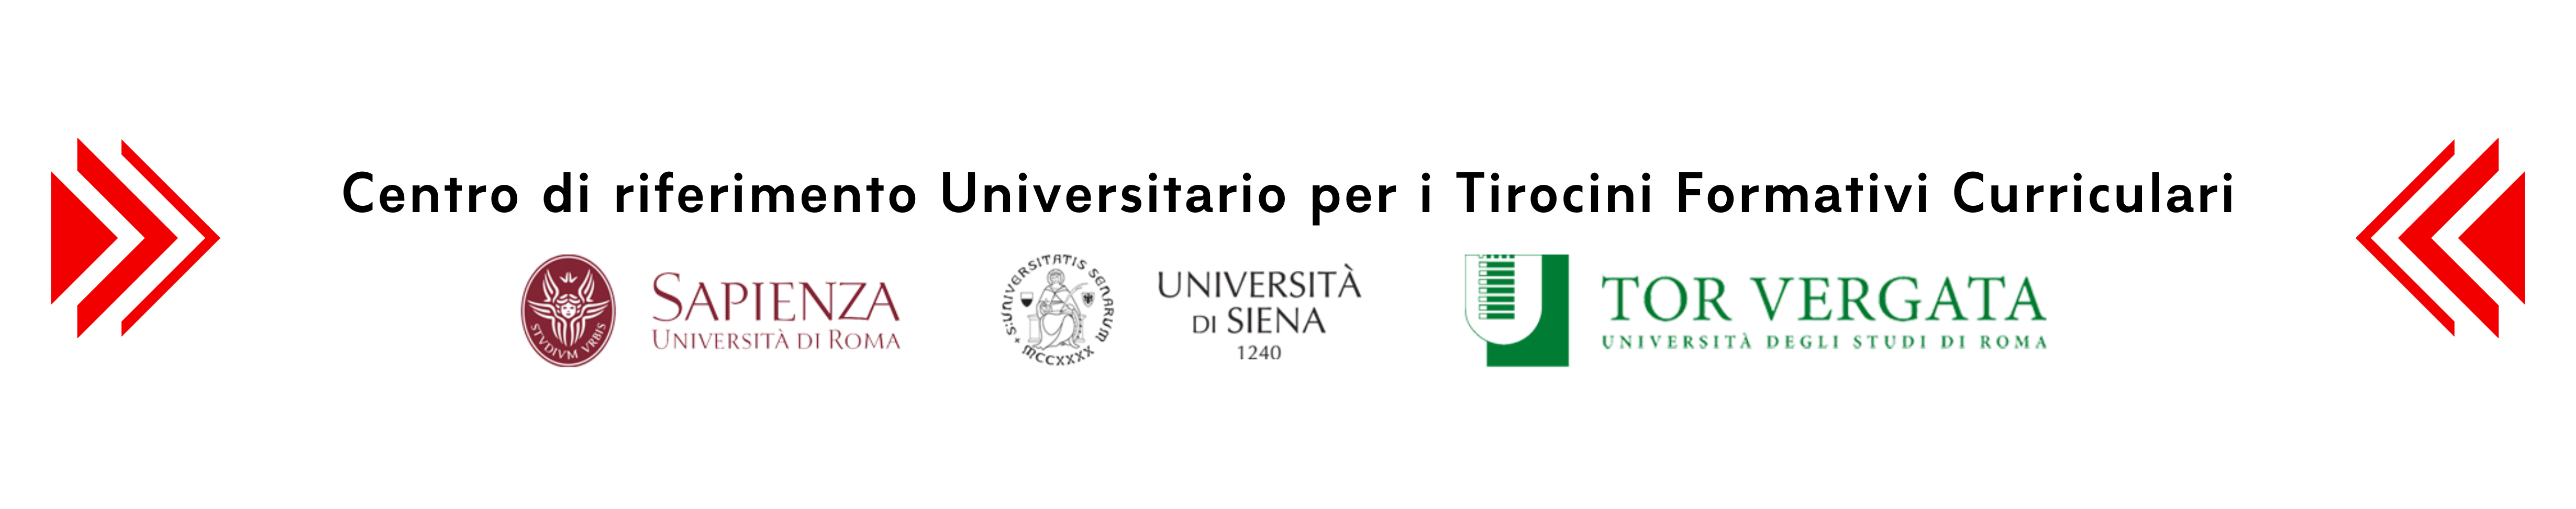 Centro di riferimento Universitario per i Tirocini Formativi Curriculari (2)